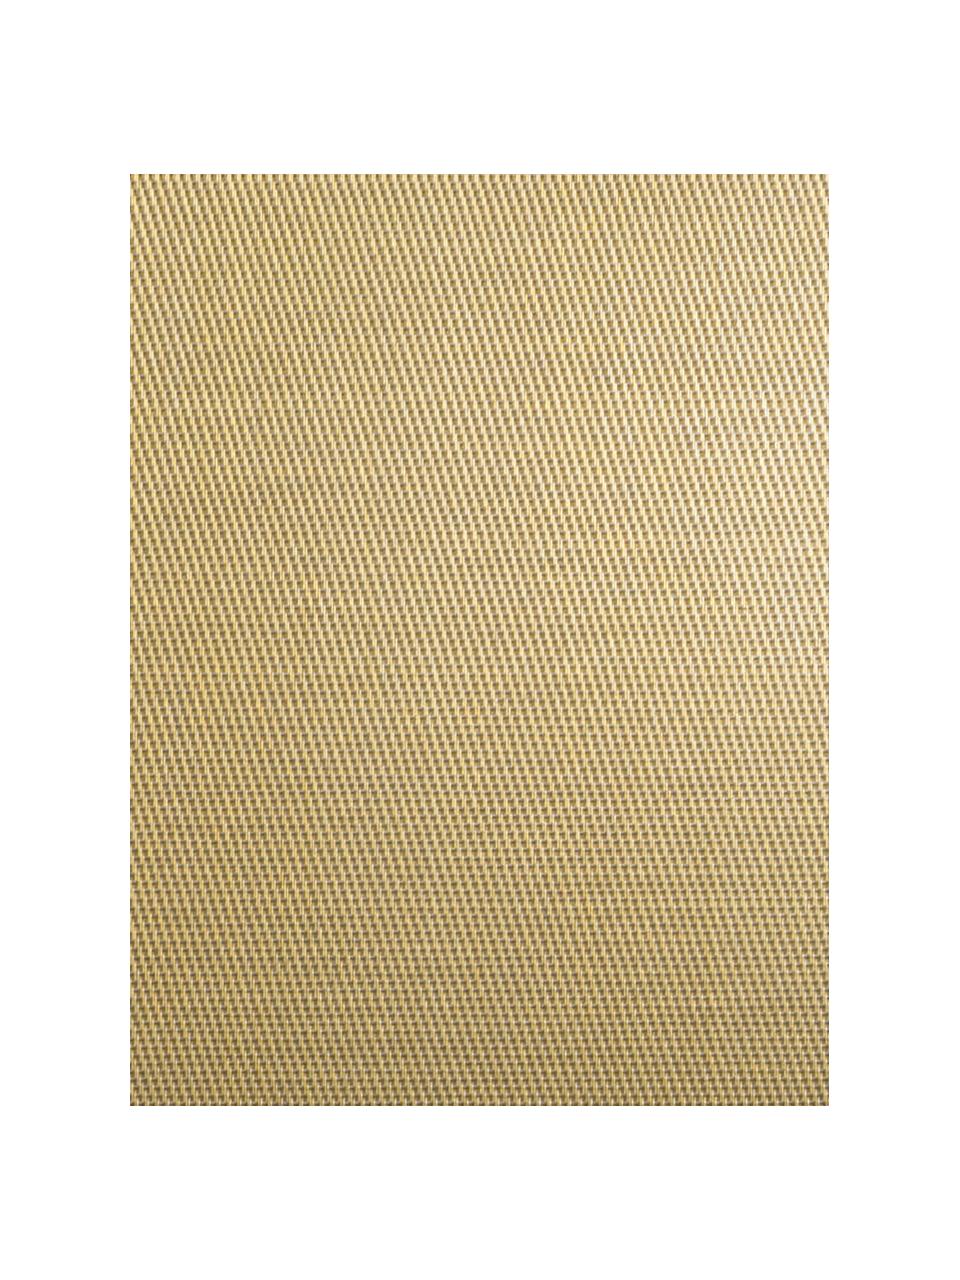 Kunststoffen placemats Trefl, 2 stuks, Kunststof (PVC), Goudkleurig, B 33 x L 46 cm